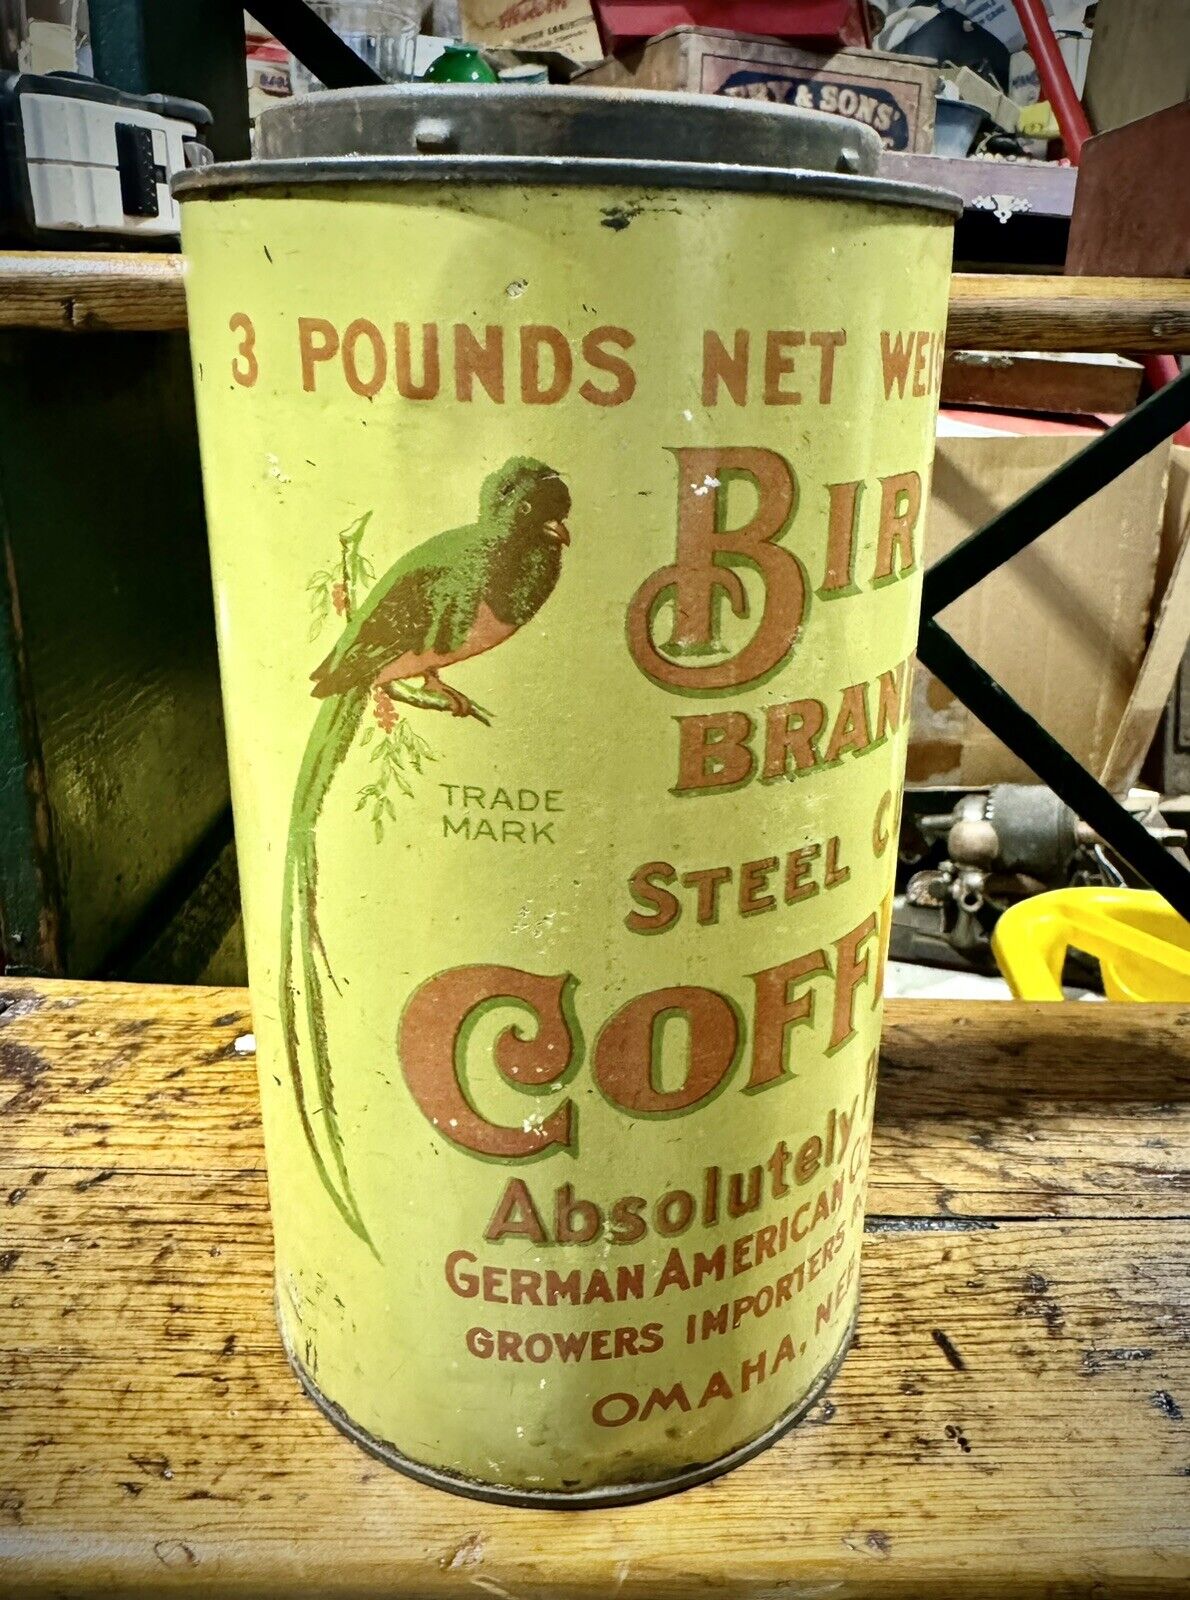 Rare 1900s BIRD BRAND STEEL CUT COFFEE ANTIQUE ADVERTISING TIN CAN 3 LBS